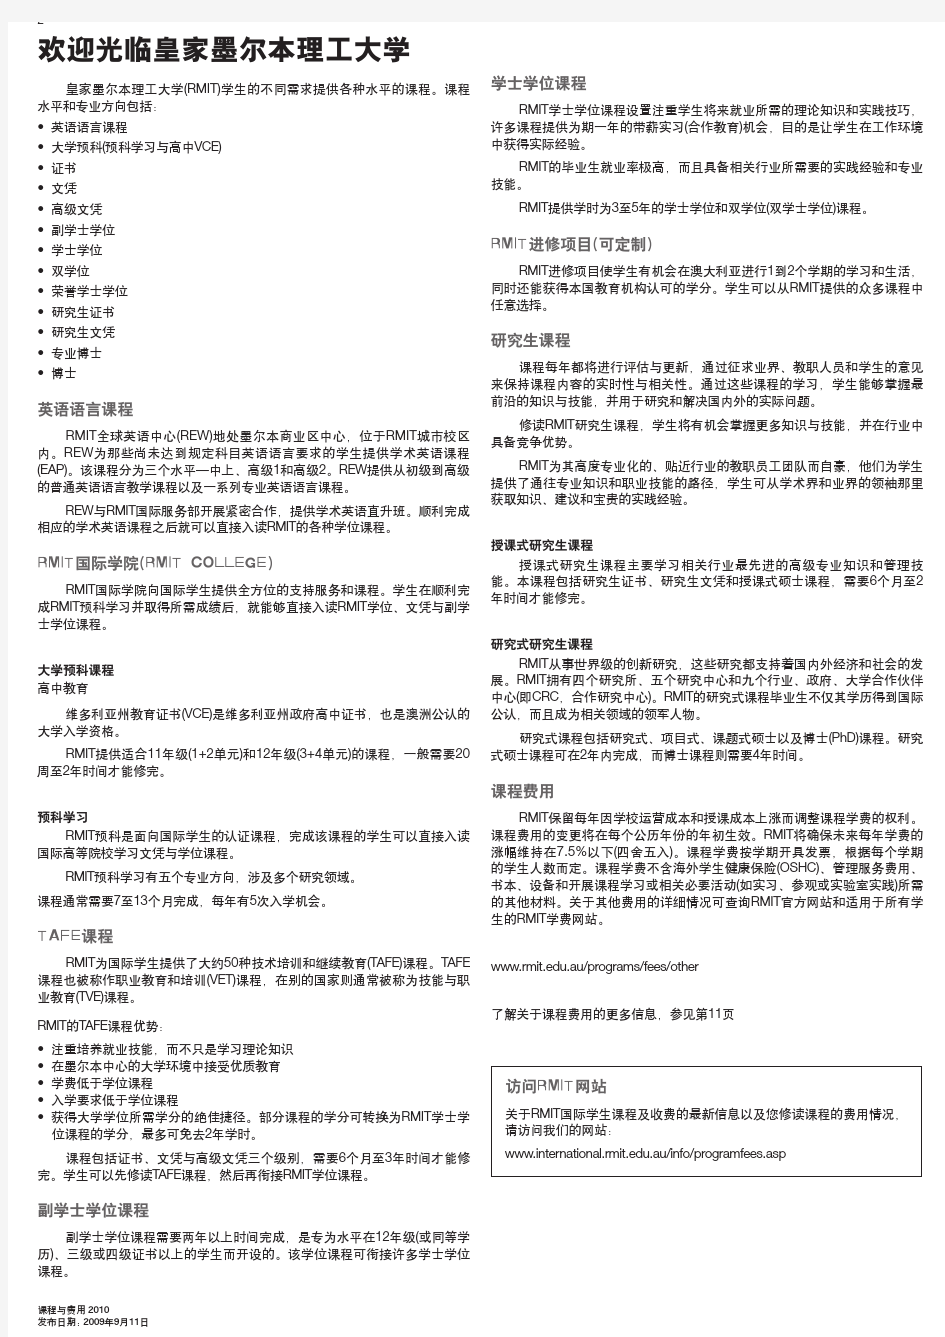 RMIT课程与费用手册-中文